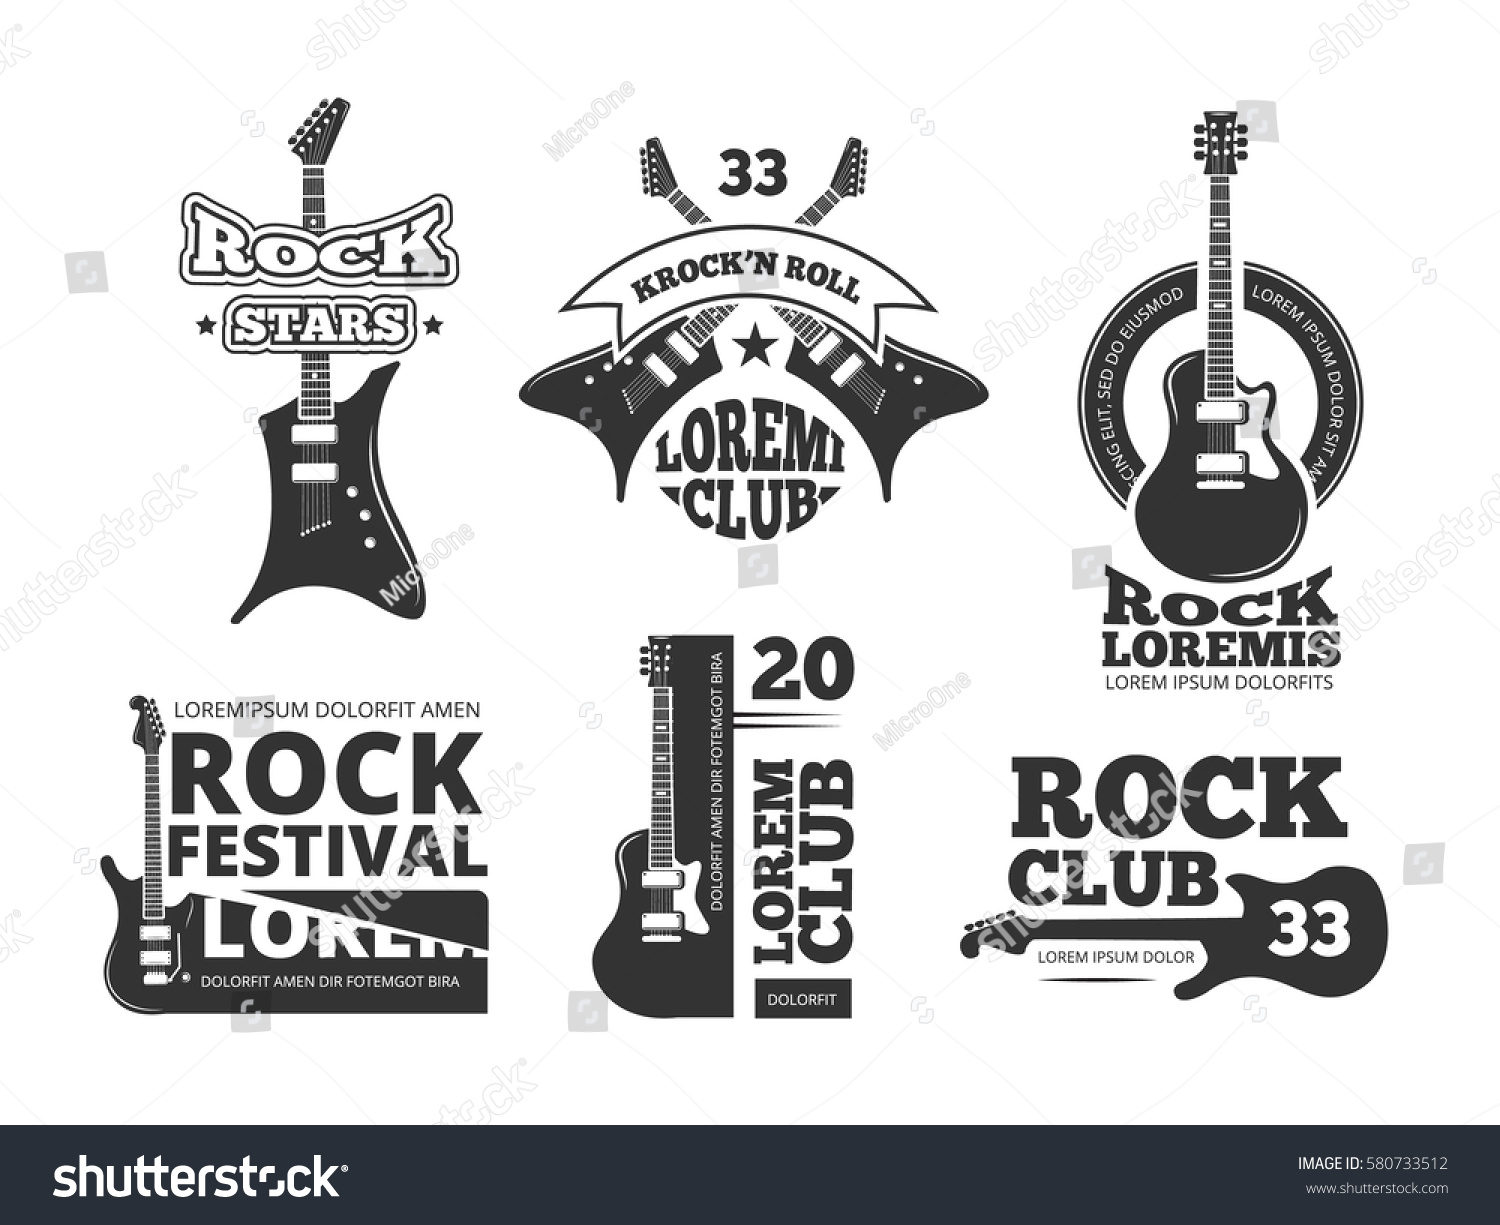 Vintage Heavy Rock Jazz Band Guitar Stock Vector 580733512 ...
 Vintage Music Logos